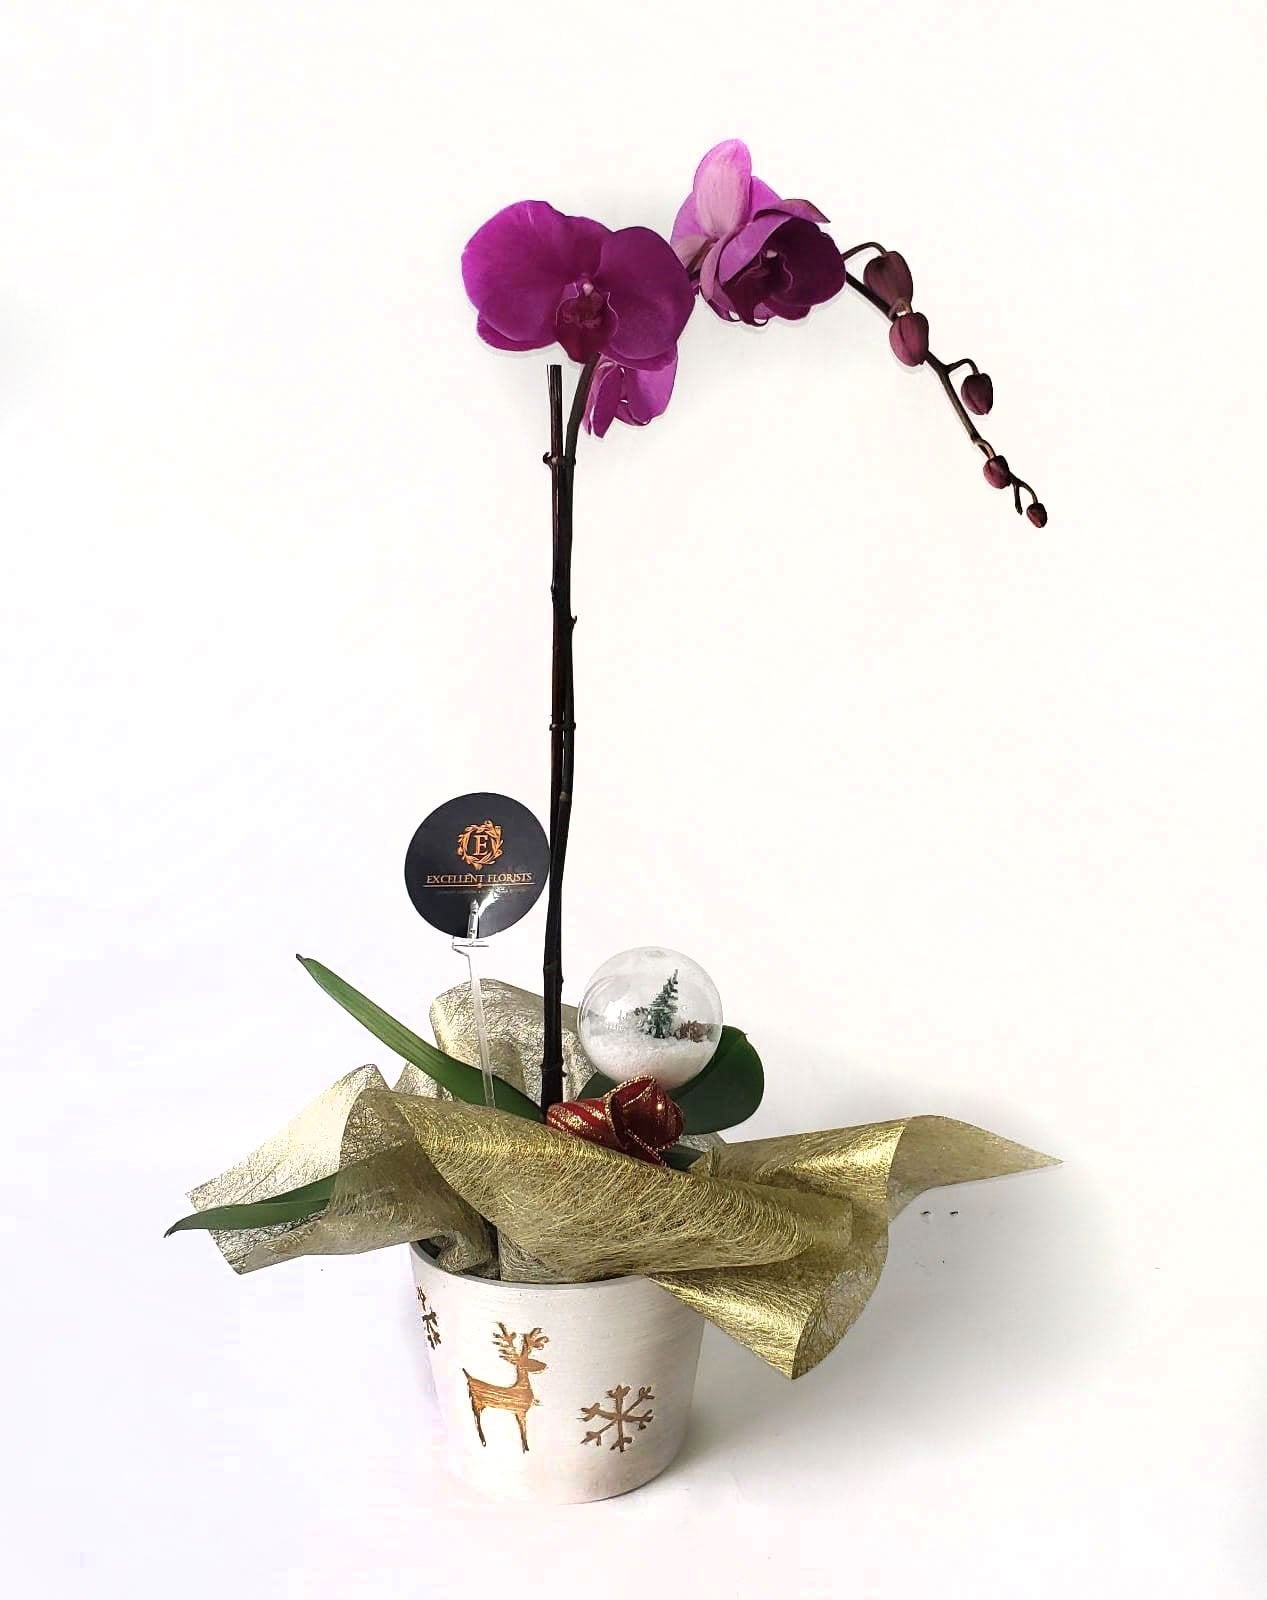 Purple Orchids on a wonderful vase